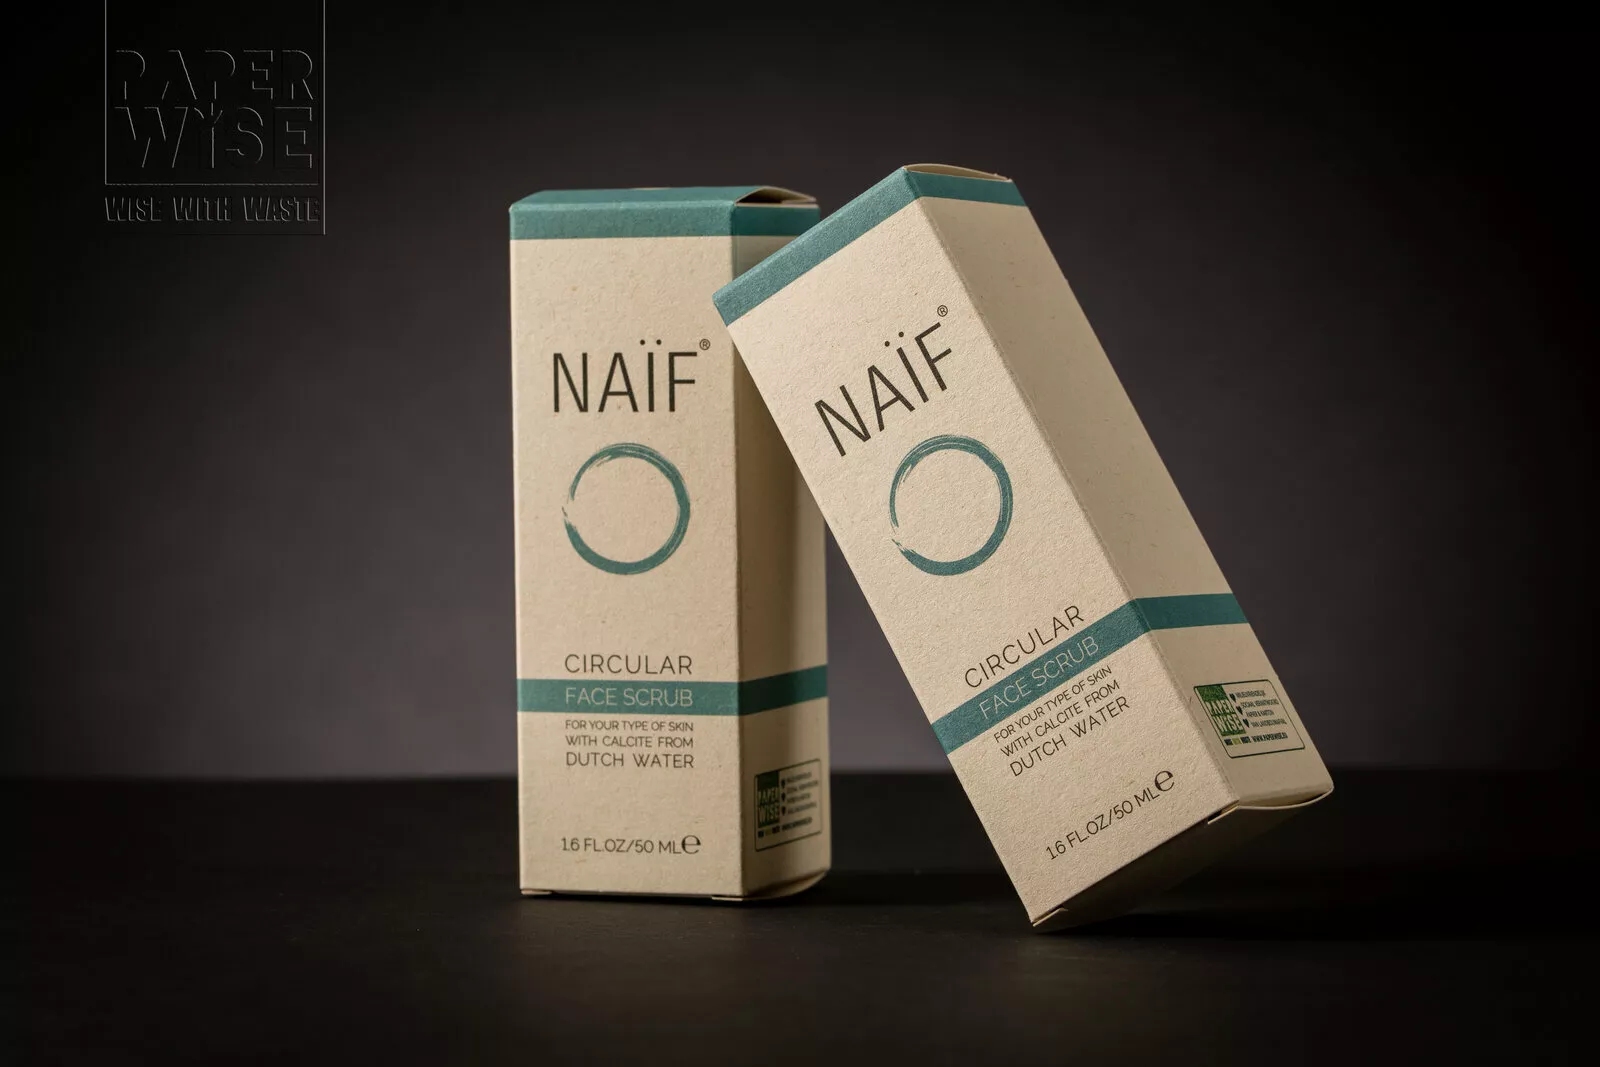 PaperWise socially responsible eco packaging natural facial scrub bodycare cream Naif